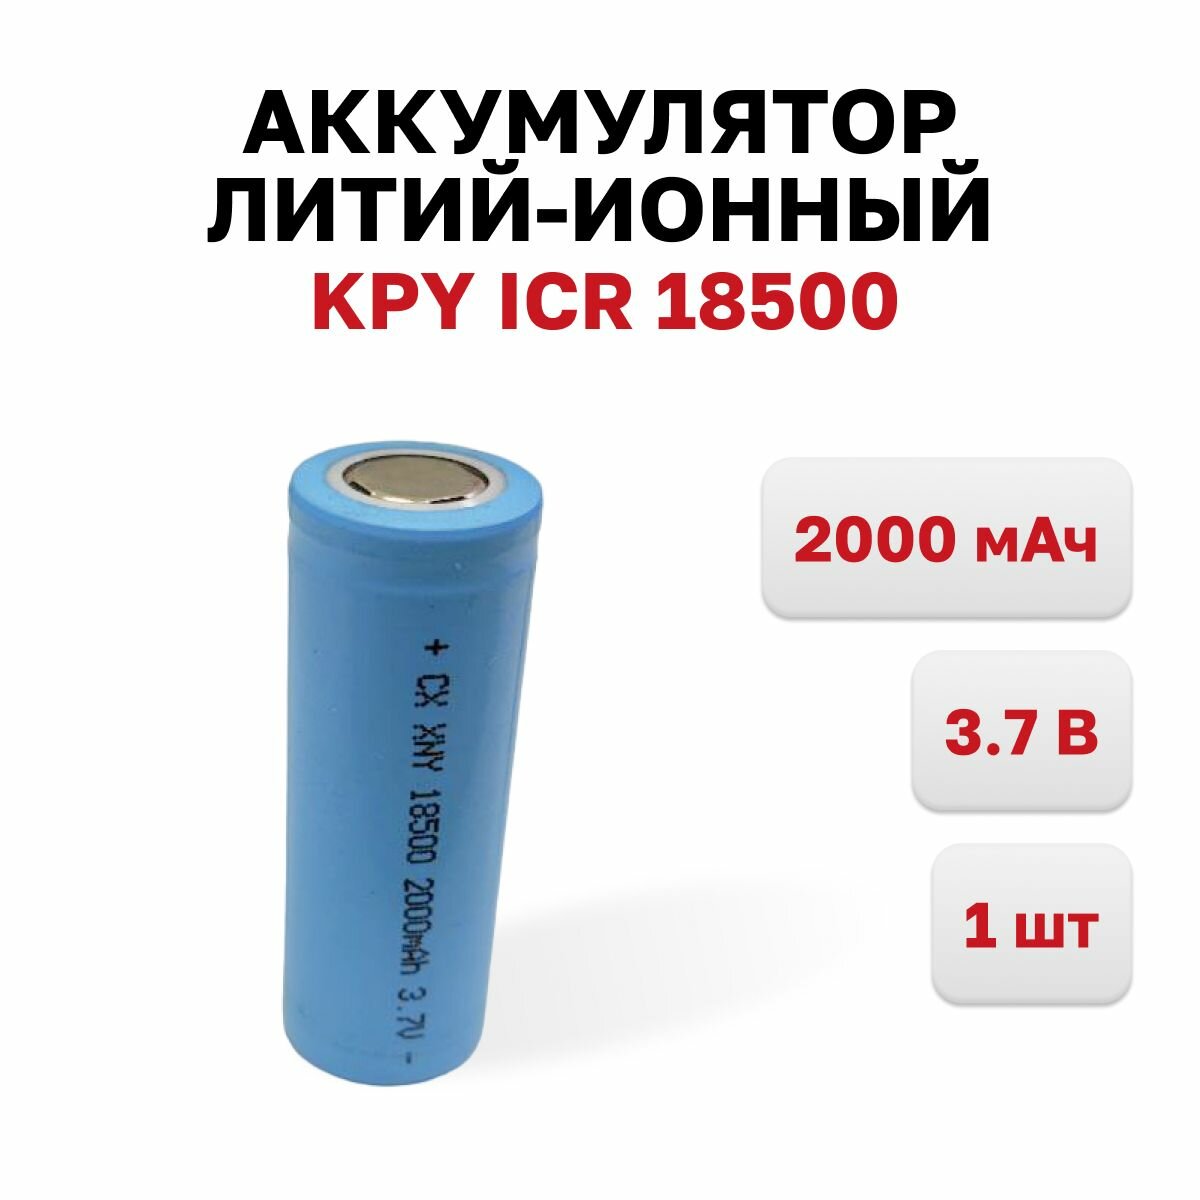 Аккумулятор литий-ионный 18500 KPY ICR 3.7В 2000 мАч 1 шт.